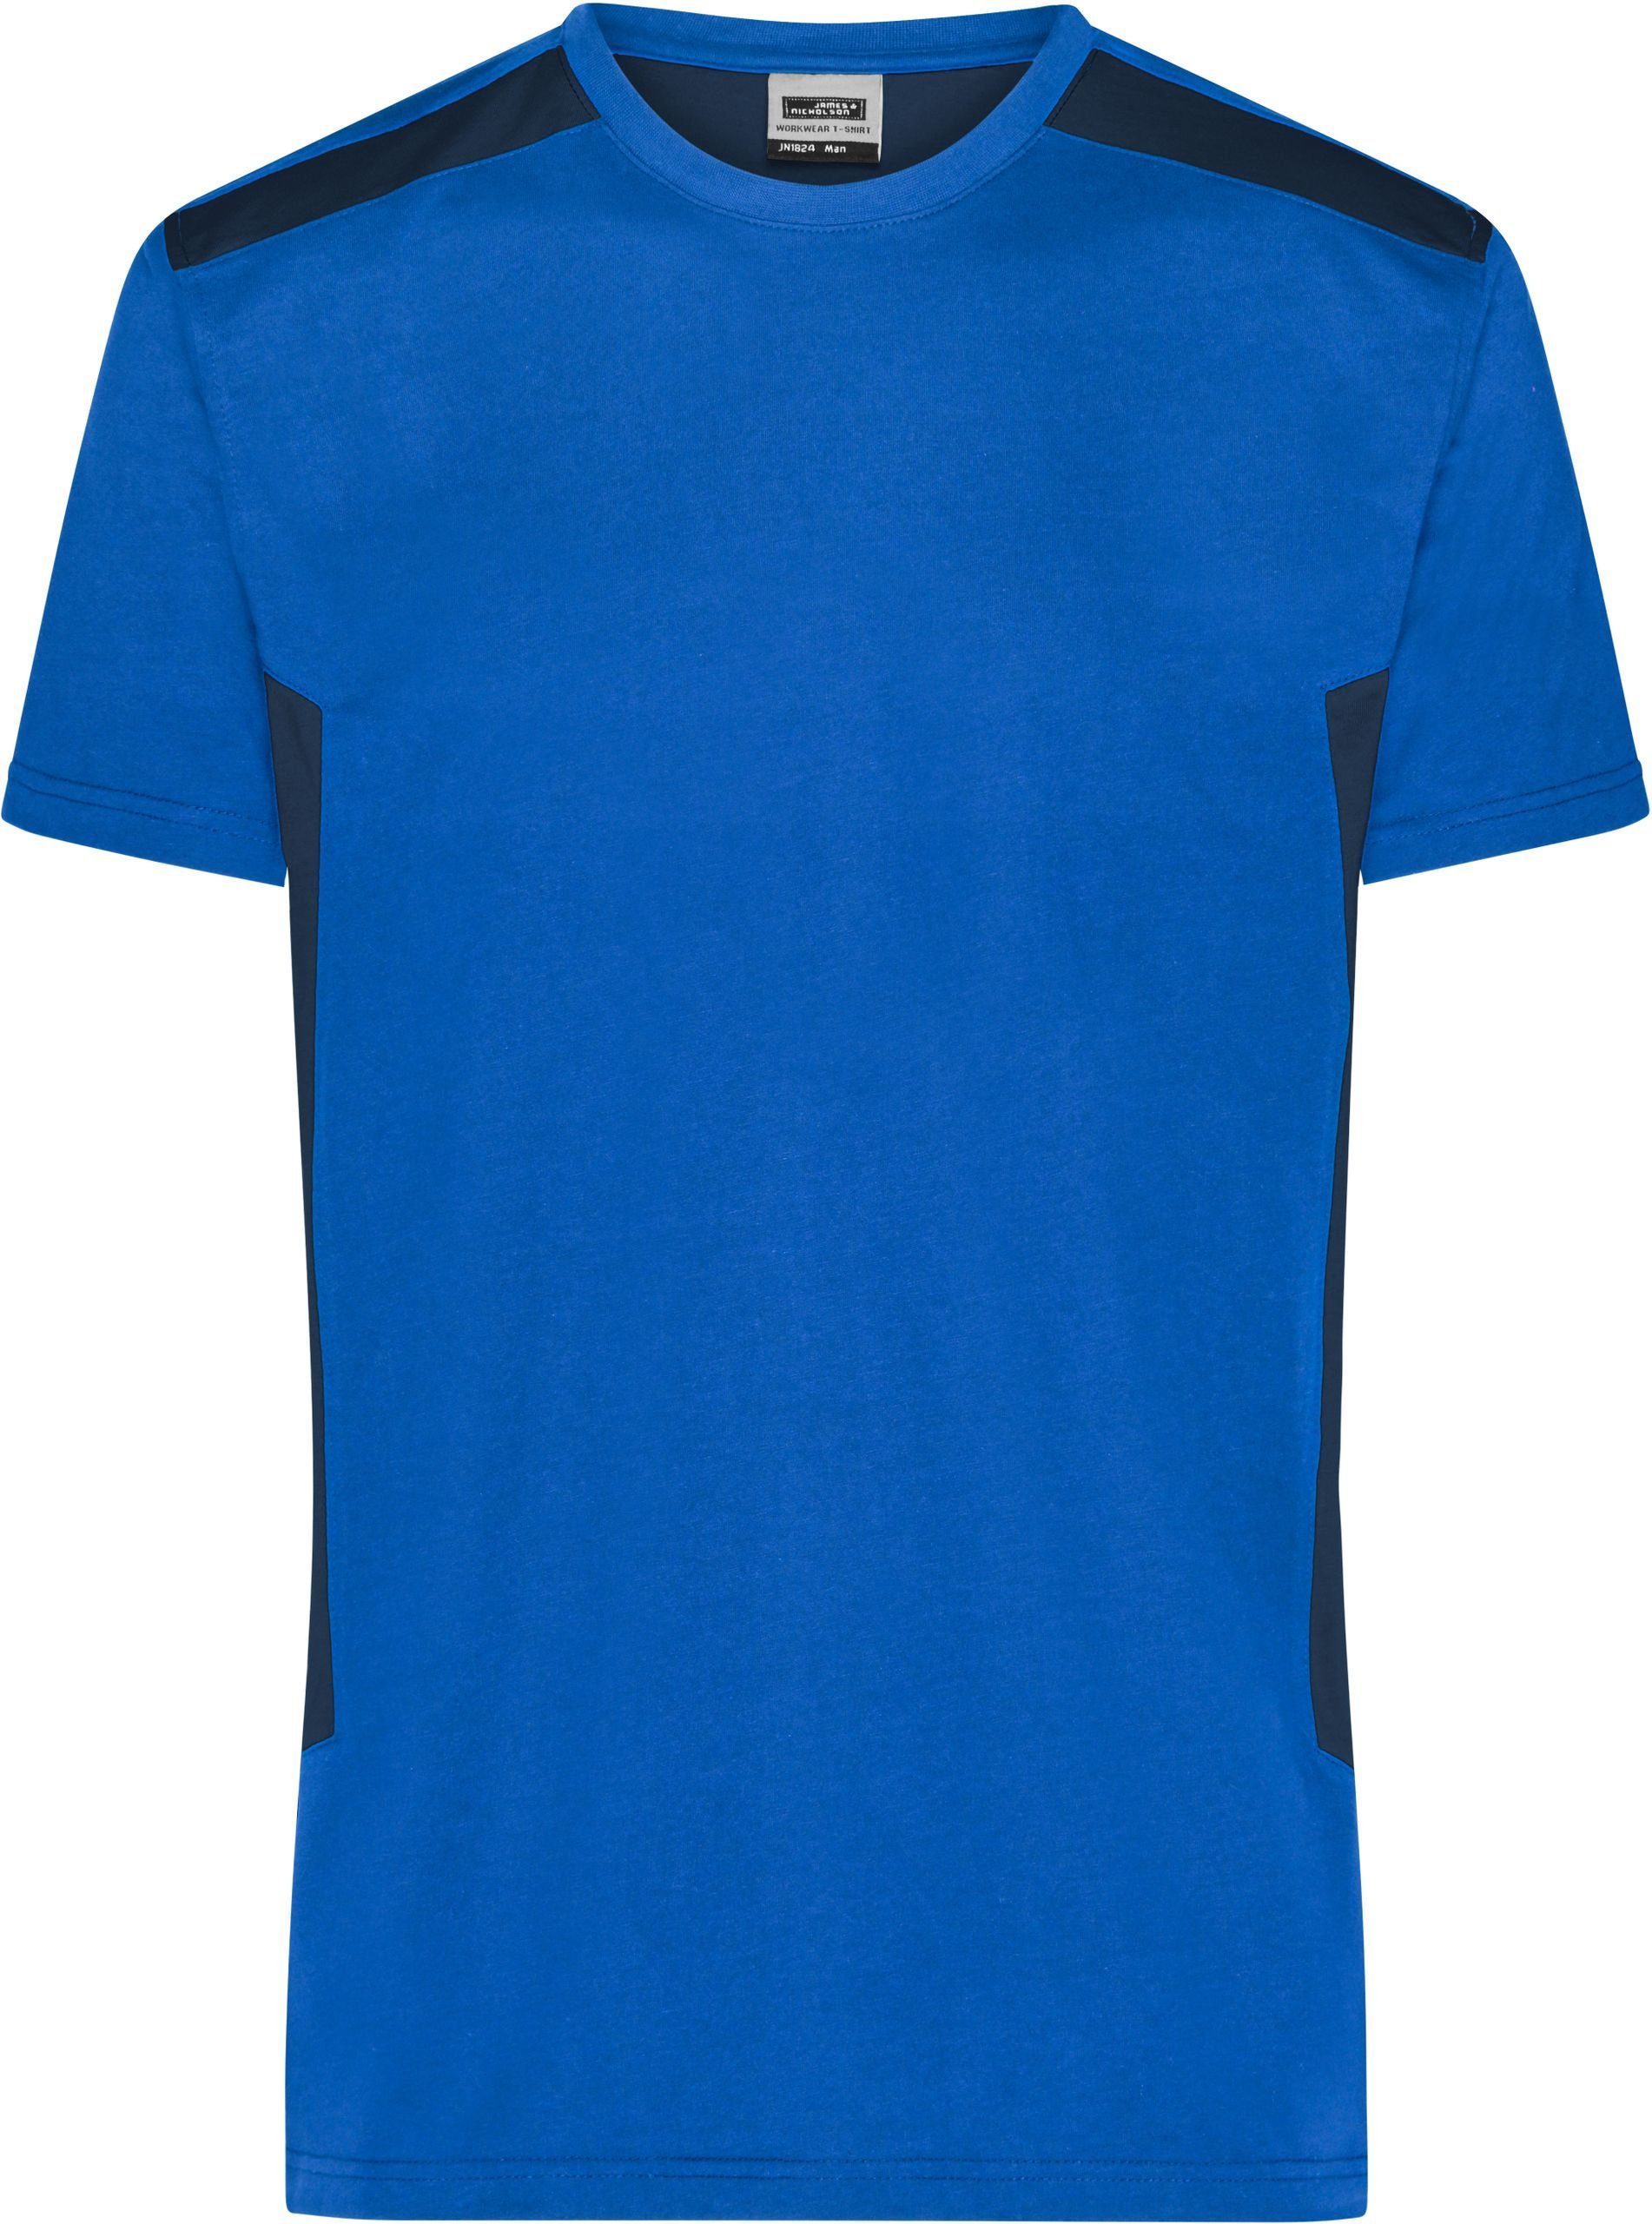 James & Nicholson T-Shirt Herren Workwear T-Shirt - Strong royal/navy